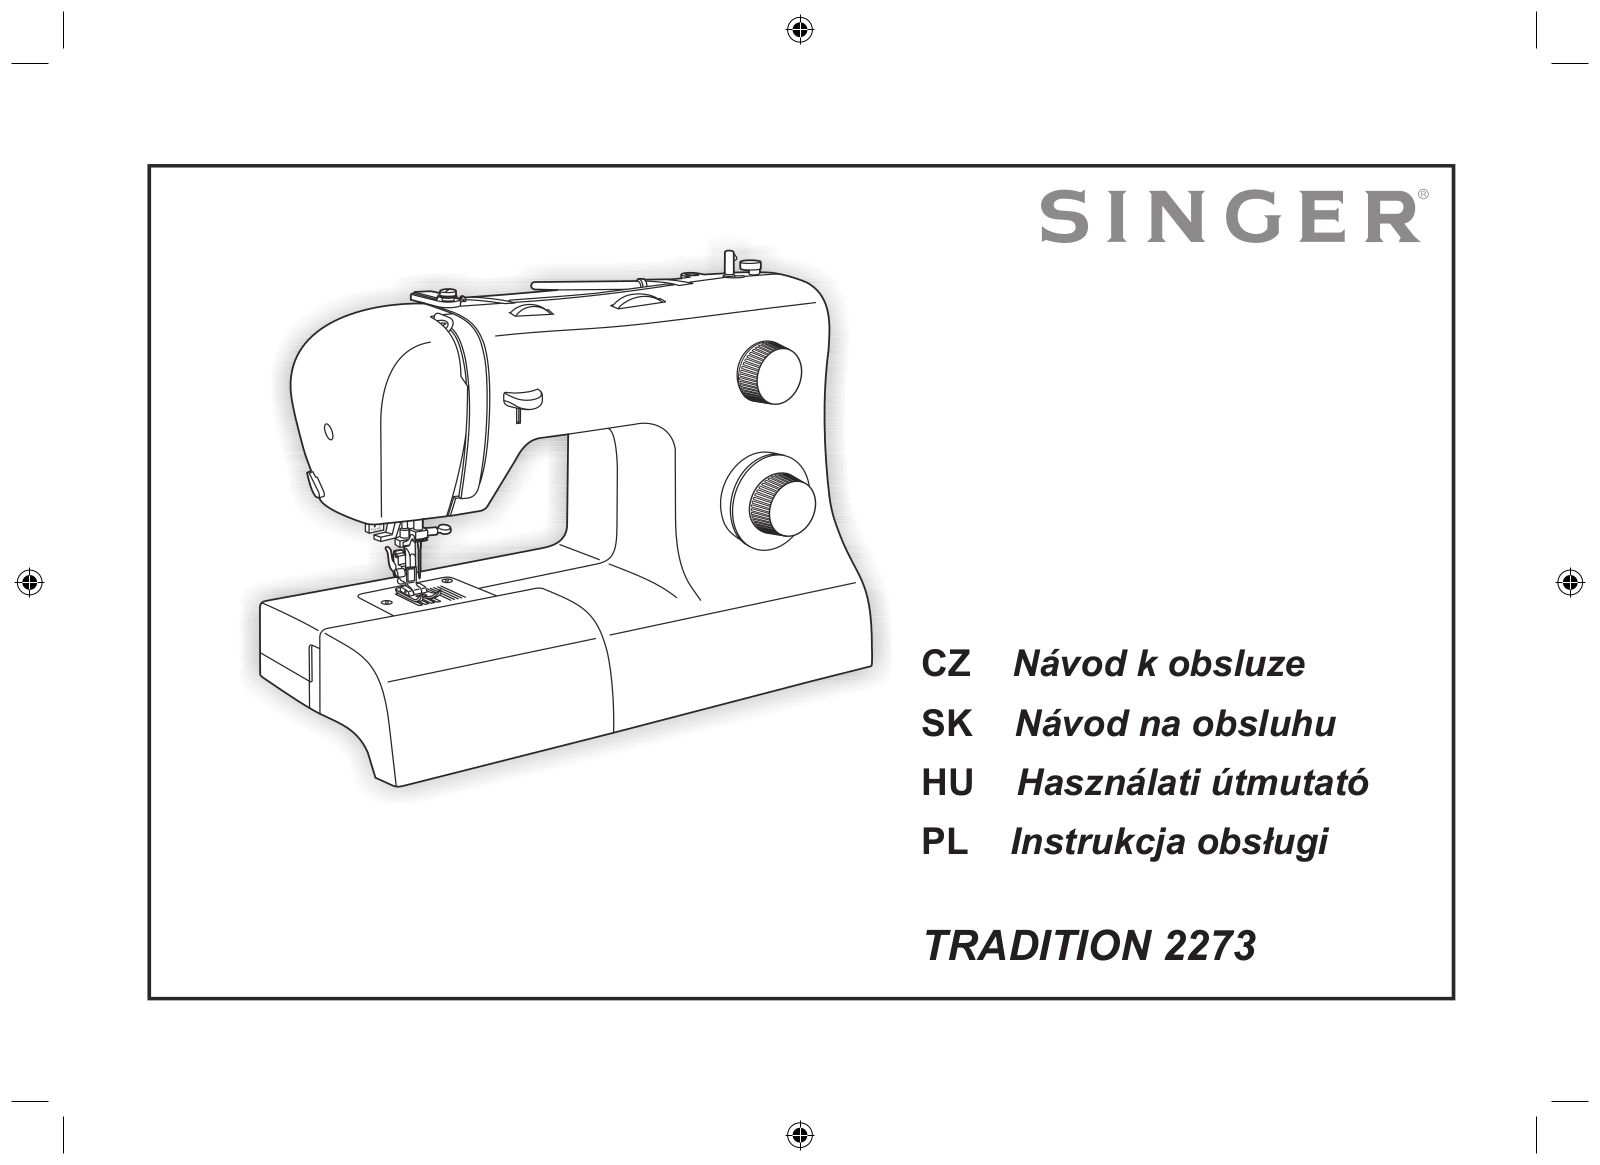 Singer 2273 Tradition User Manual